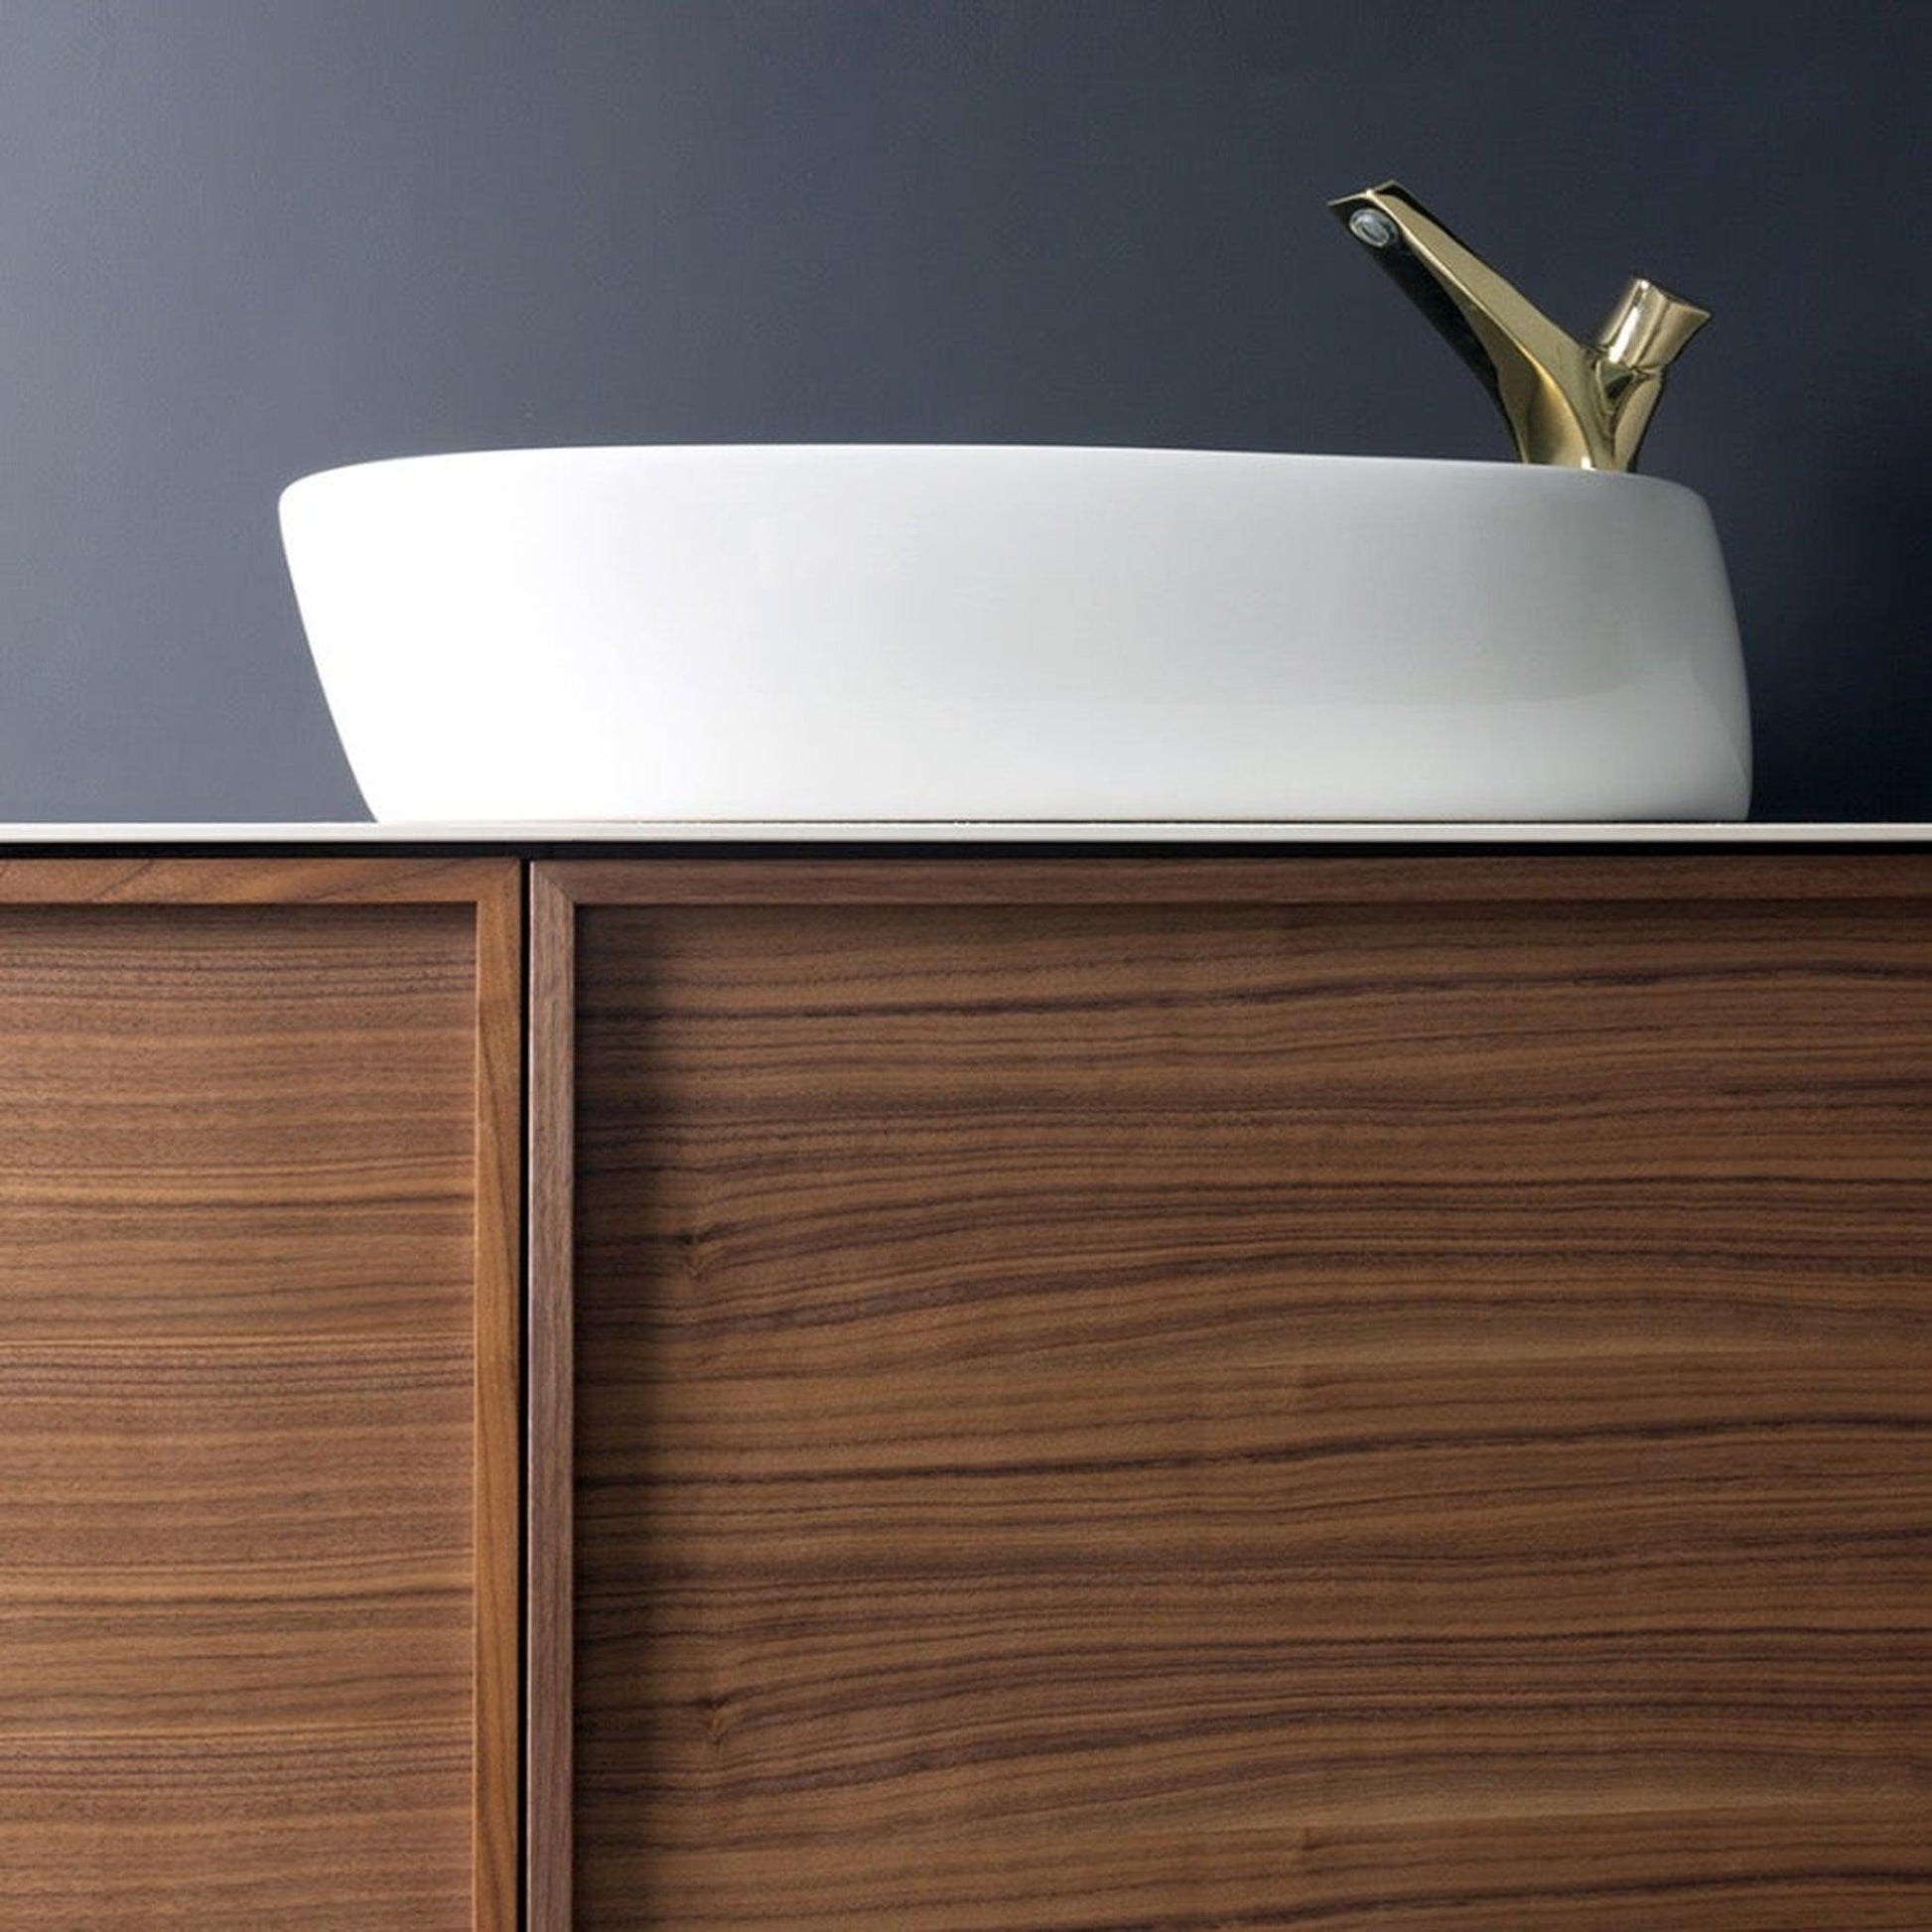 Beautiful Modern Wall Mounted Solid Surface Sink